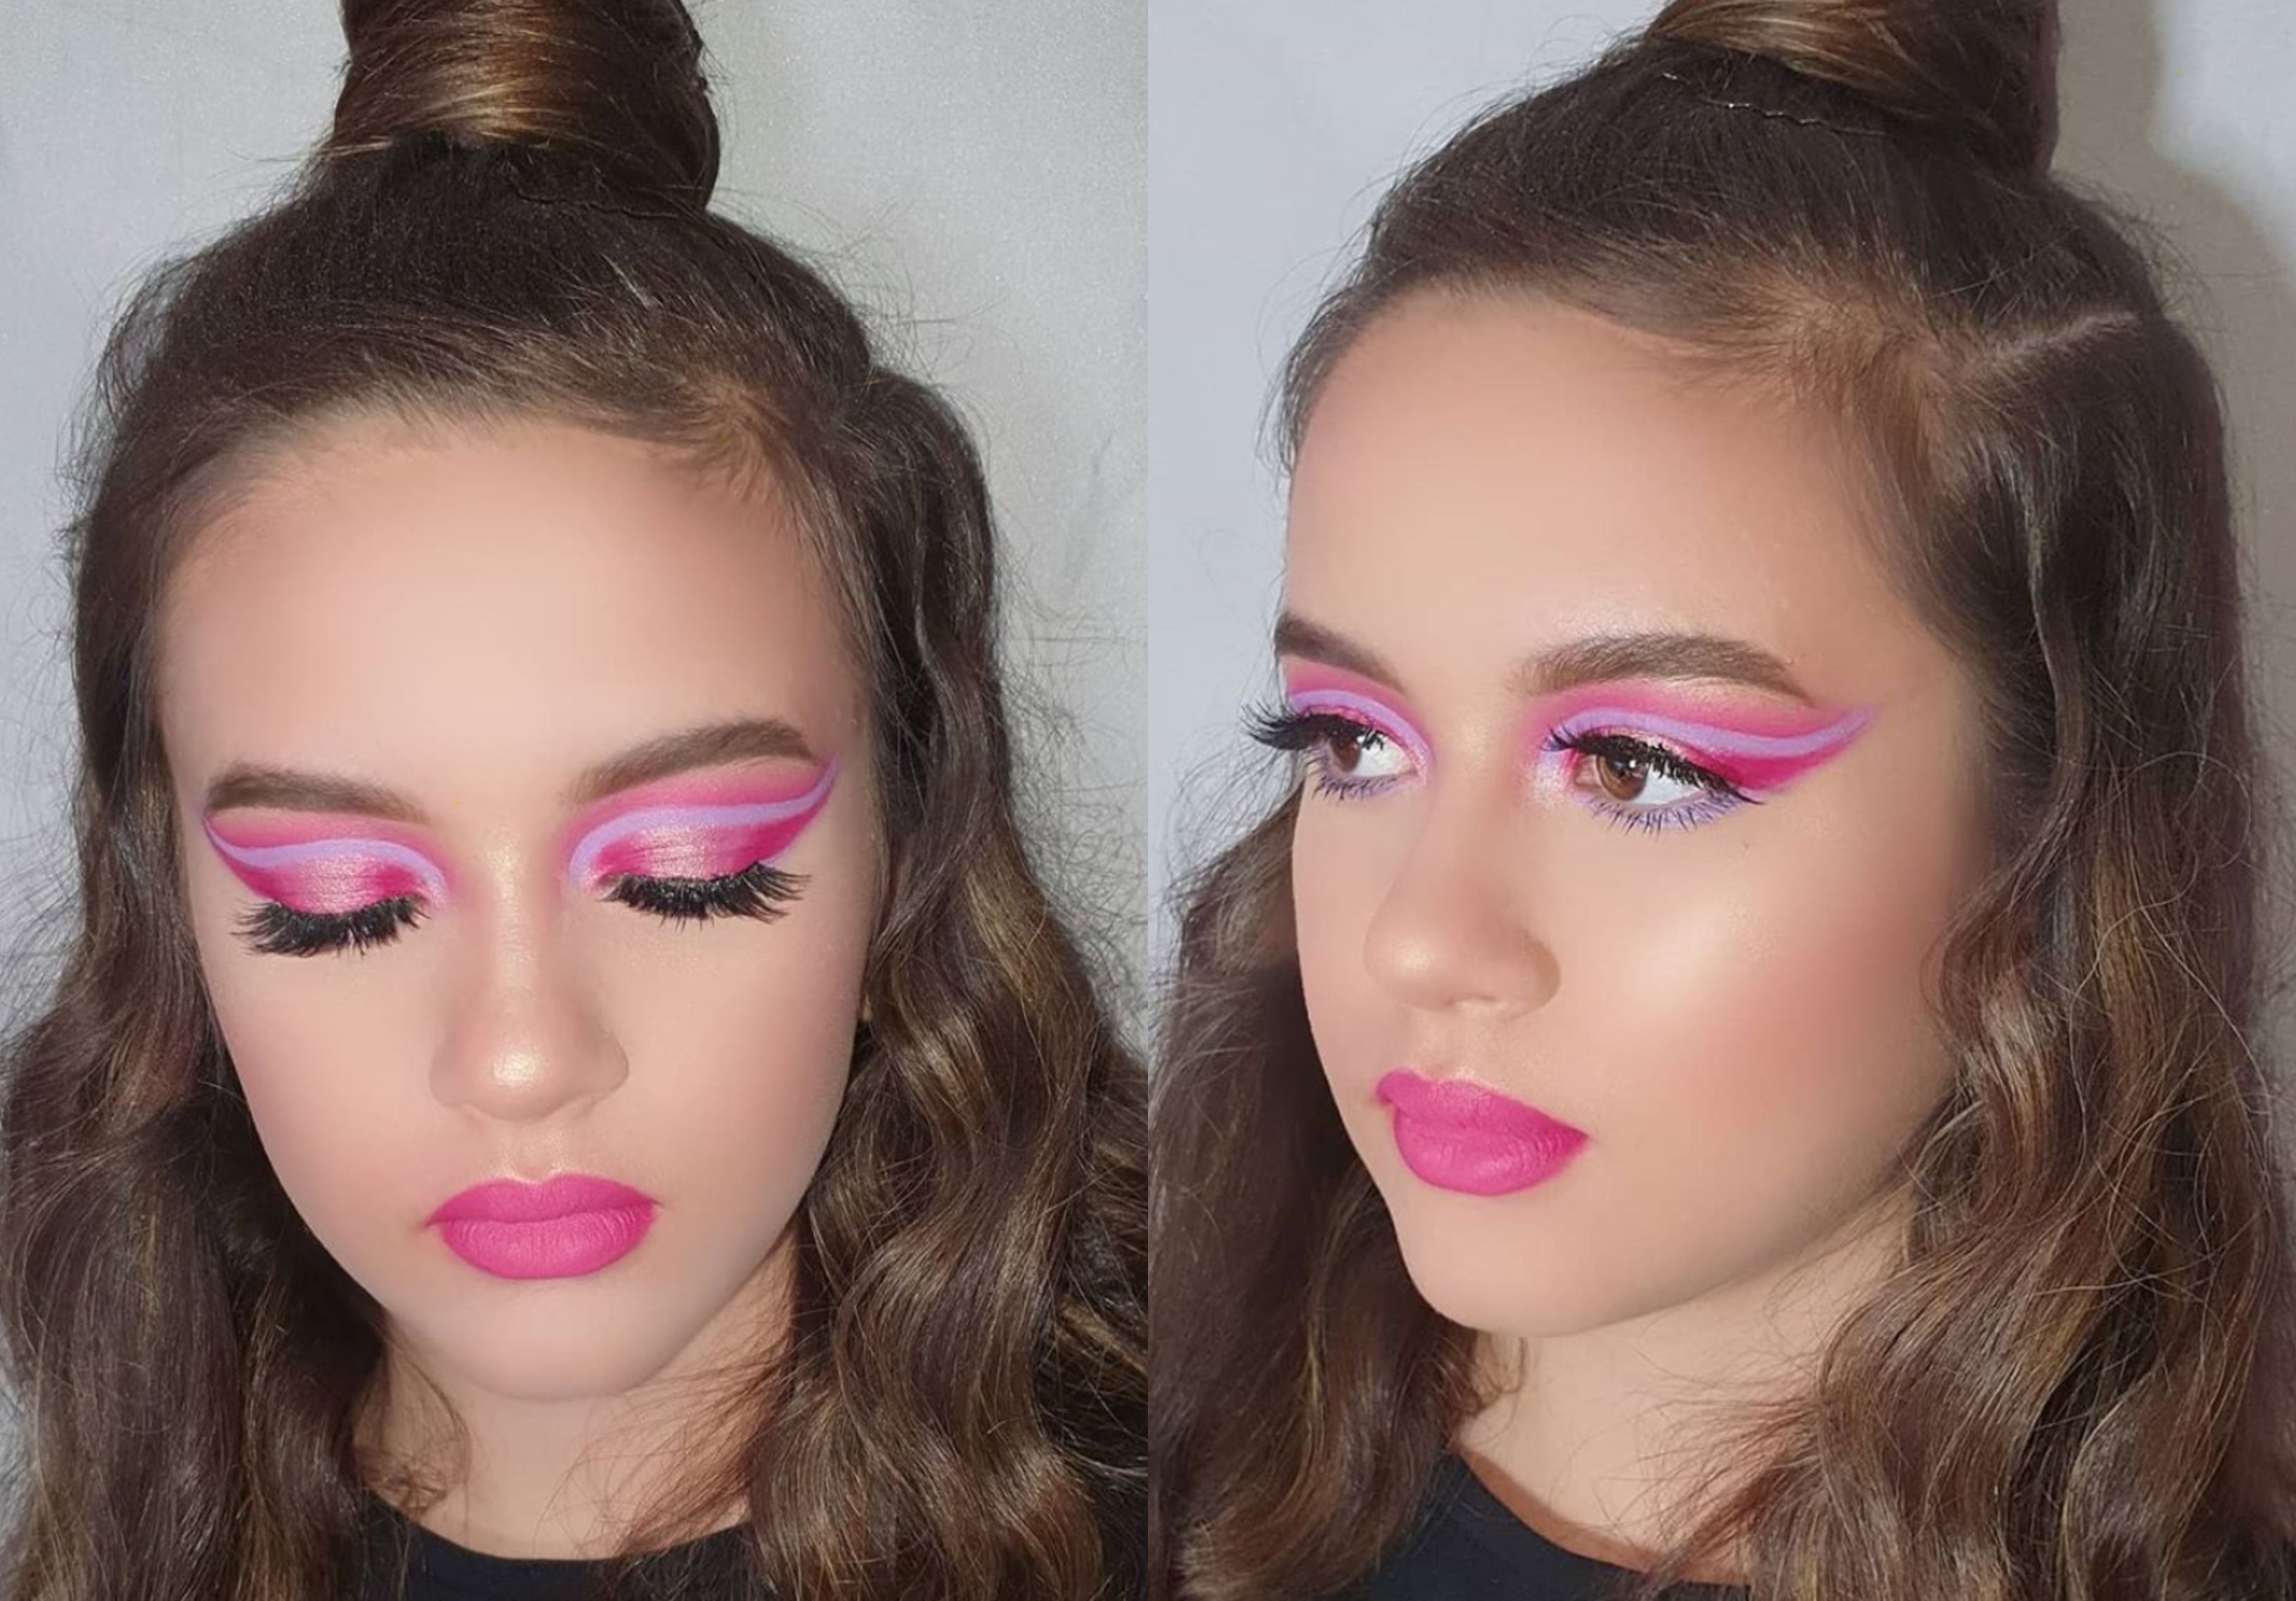 Barbie-inspired pink makeup